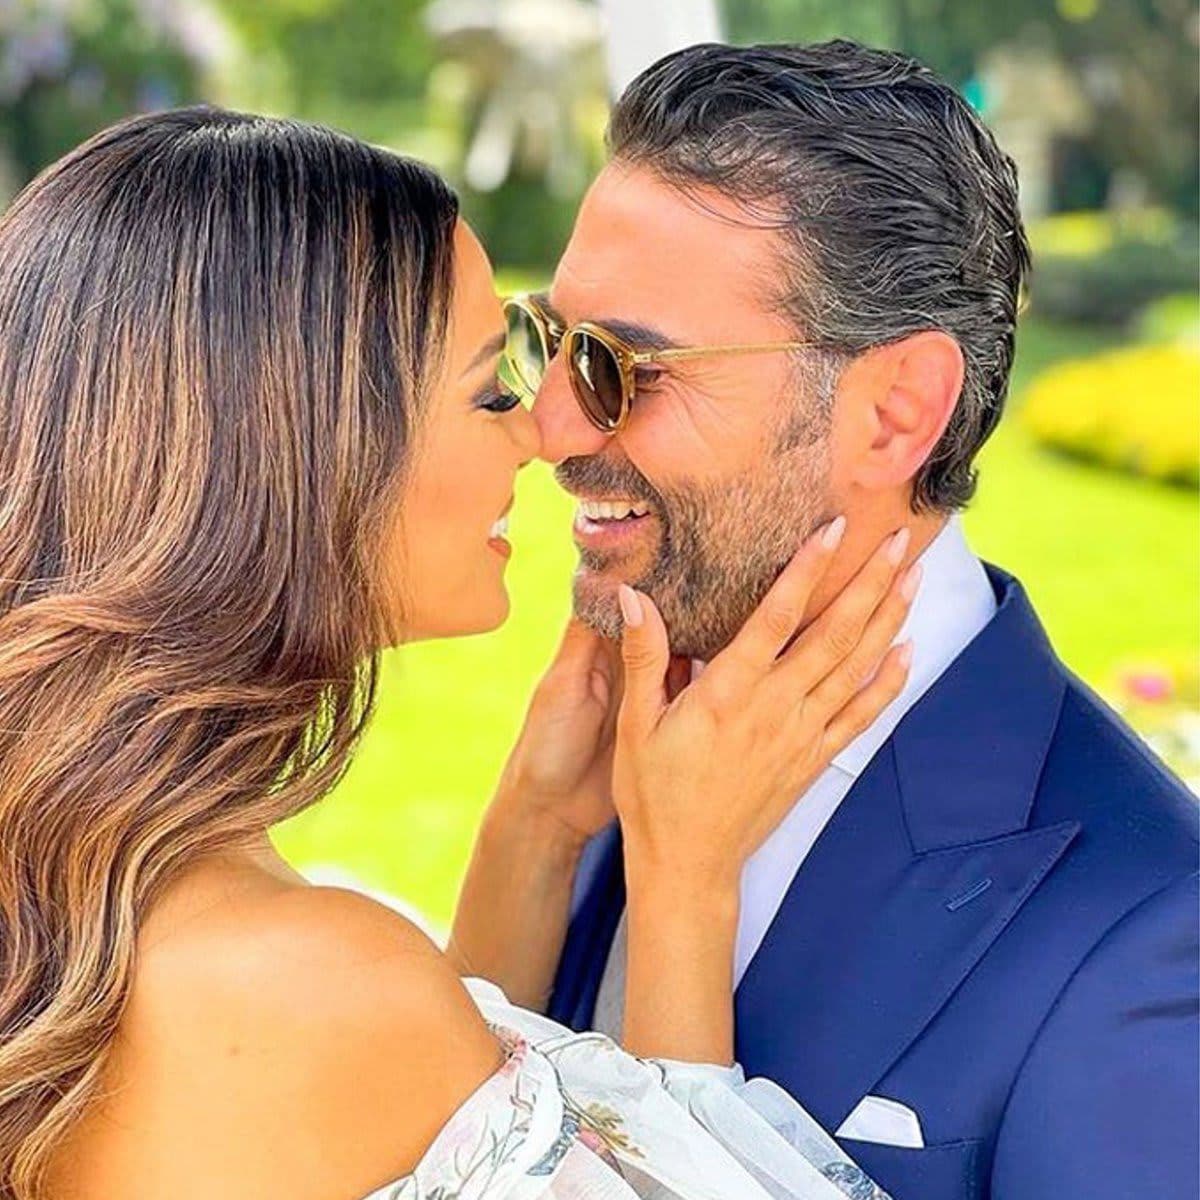 Pepe Bastón celebrates his daughter’s wedding accompanied by his wife, Eva Longoria